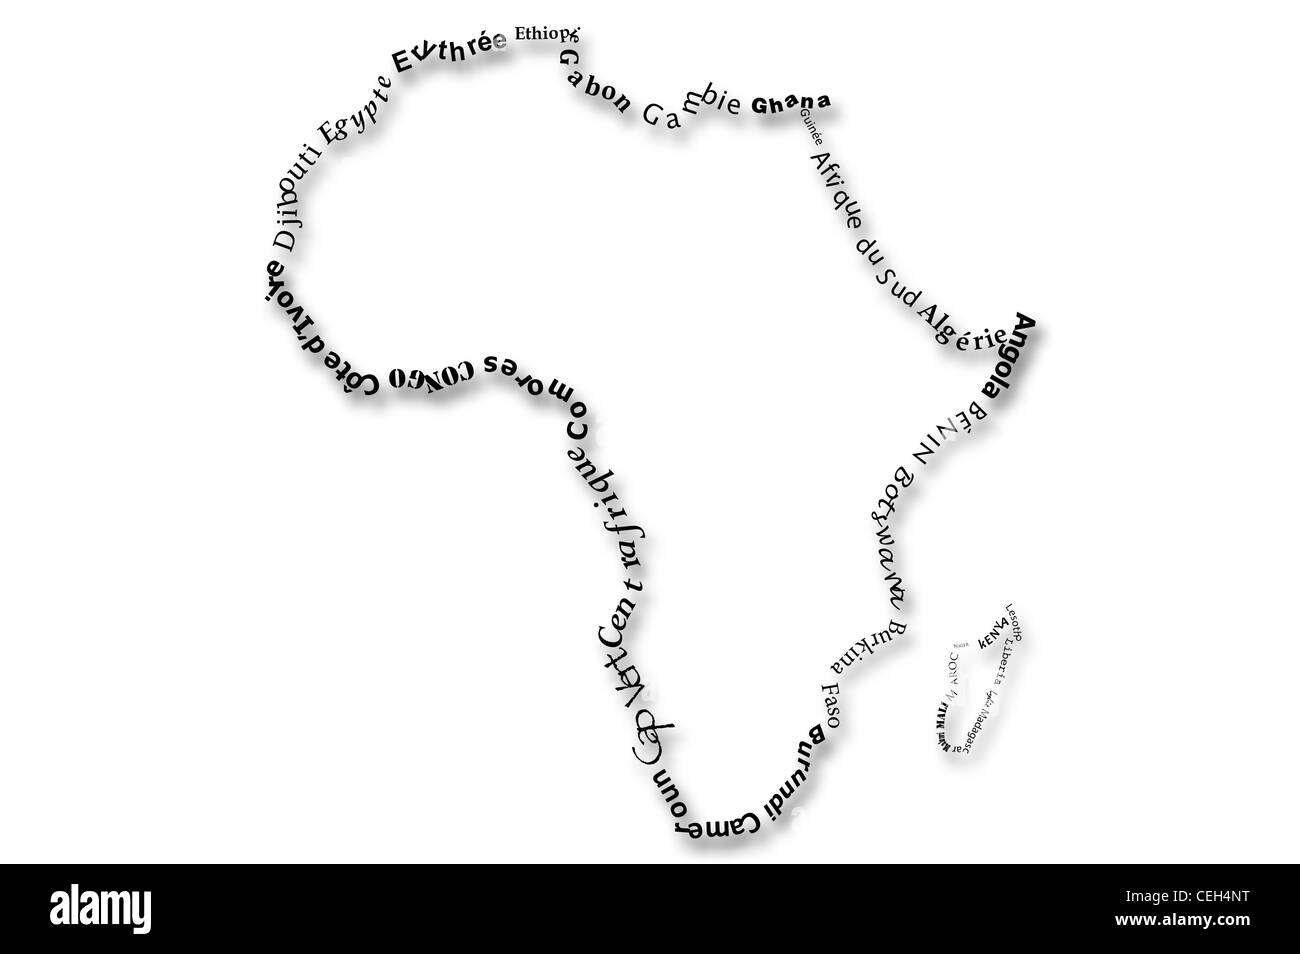 Typograhpy Illustration of africa map Stock Photo